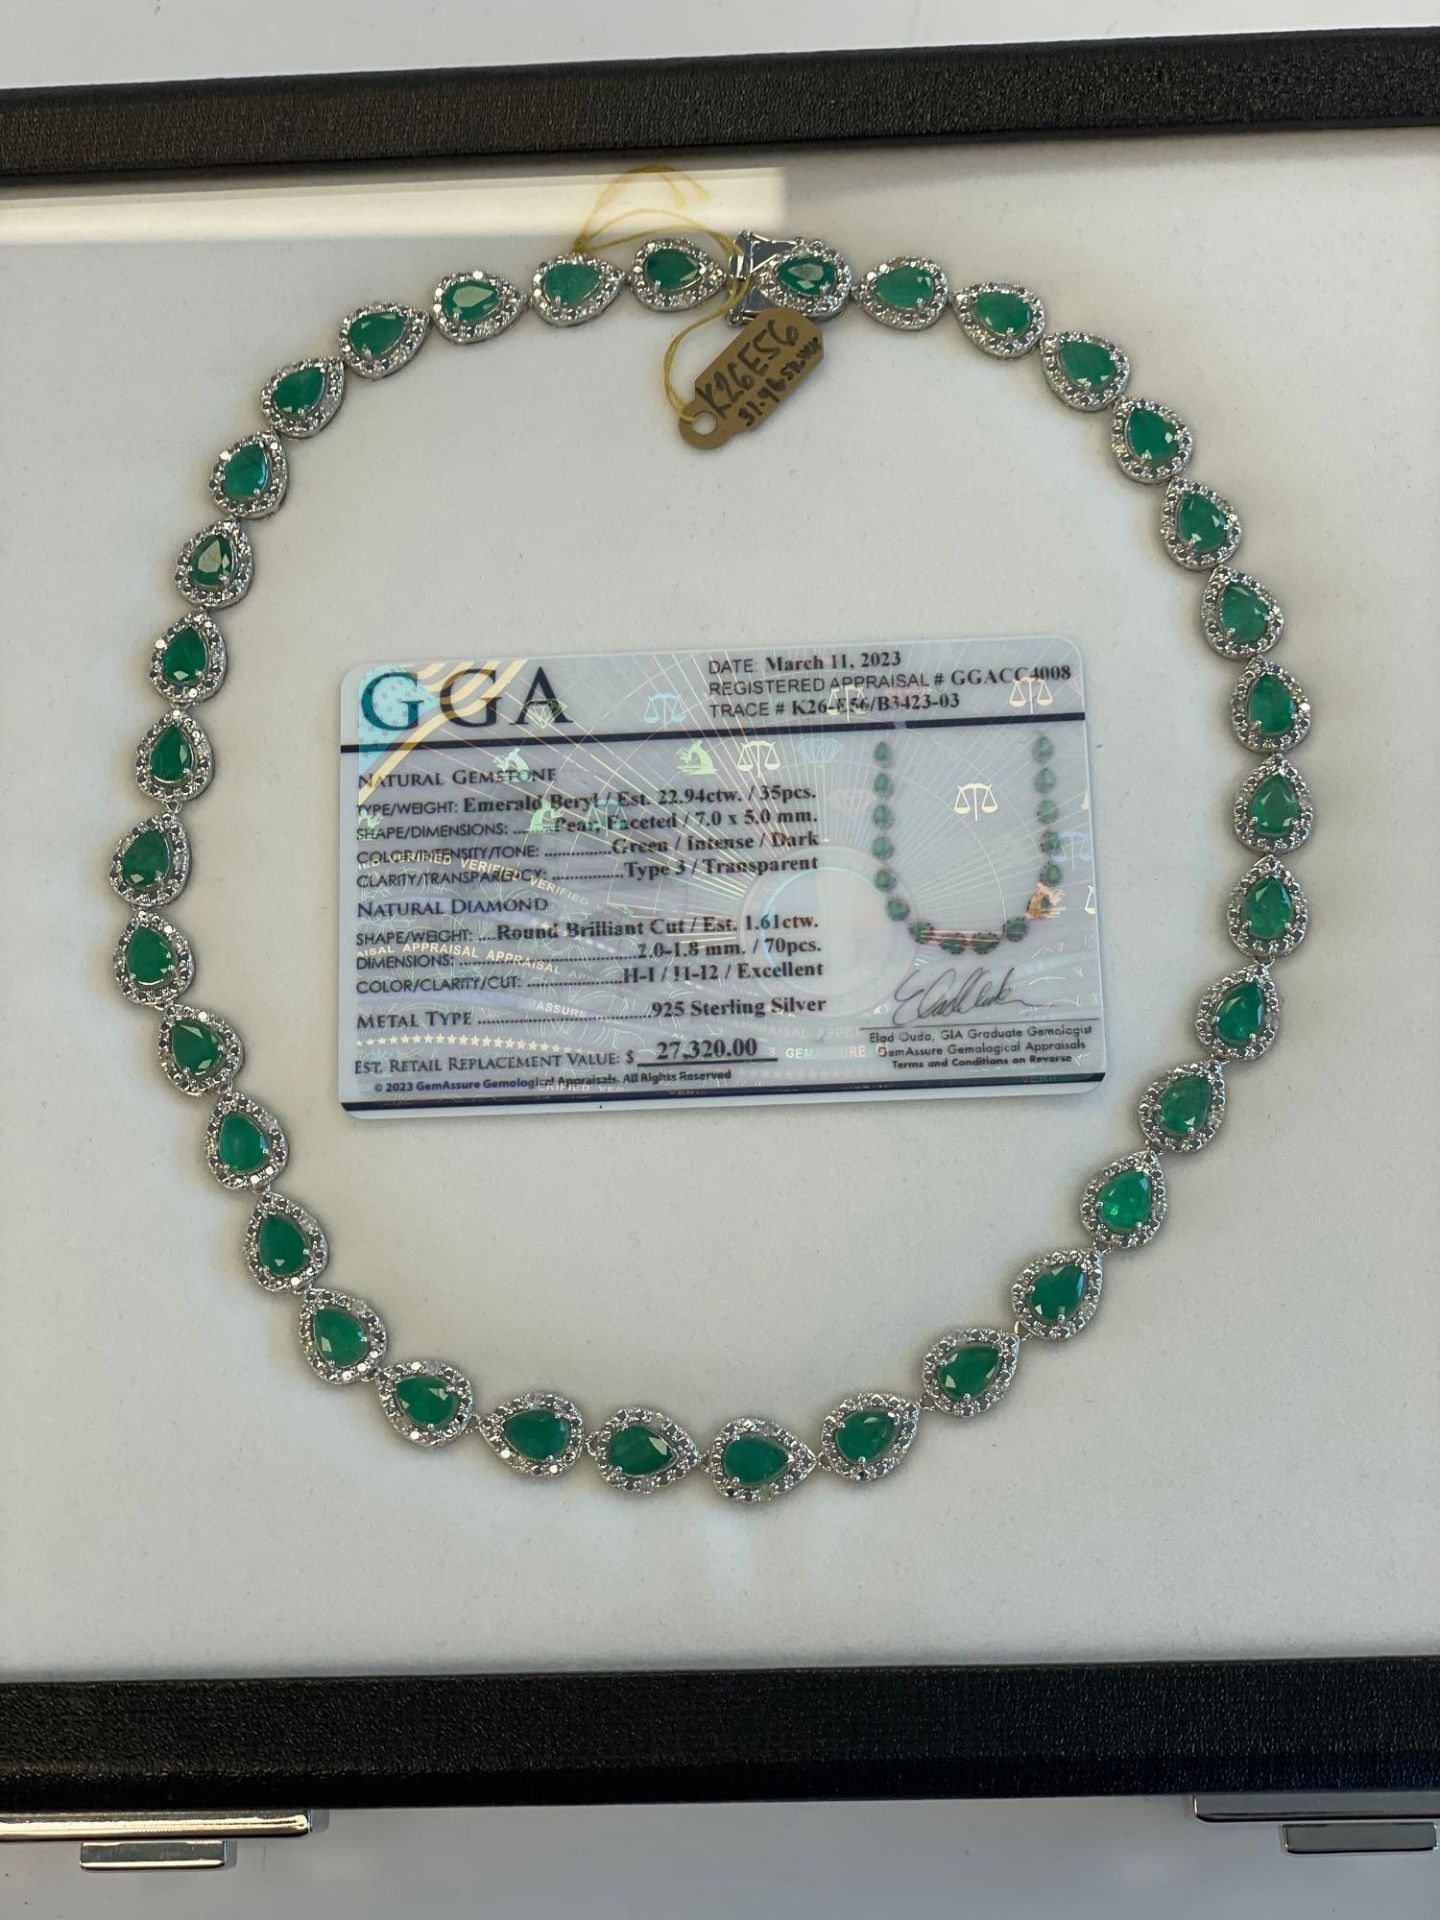 Jewelry; Emerald Beryl 22.94 ctw / Round Brillant Cut 1.61 ctw necklace - Image 6 of 6